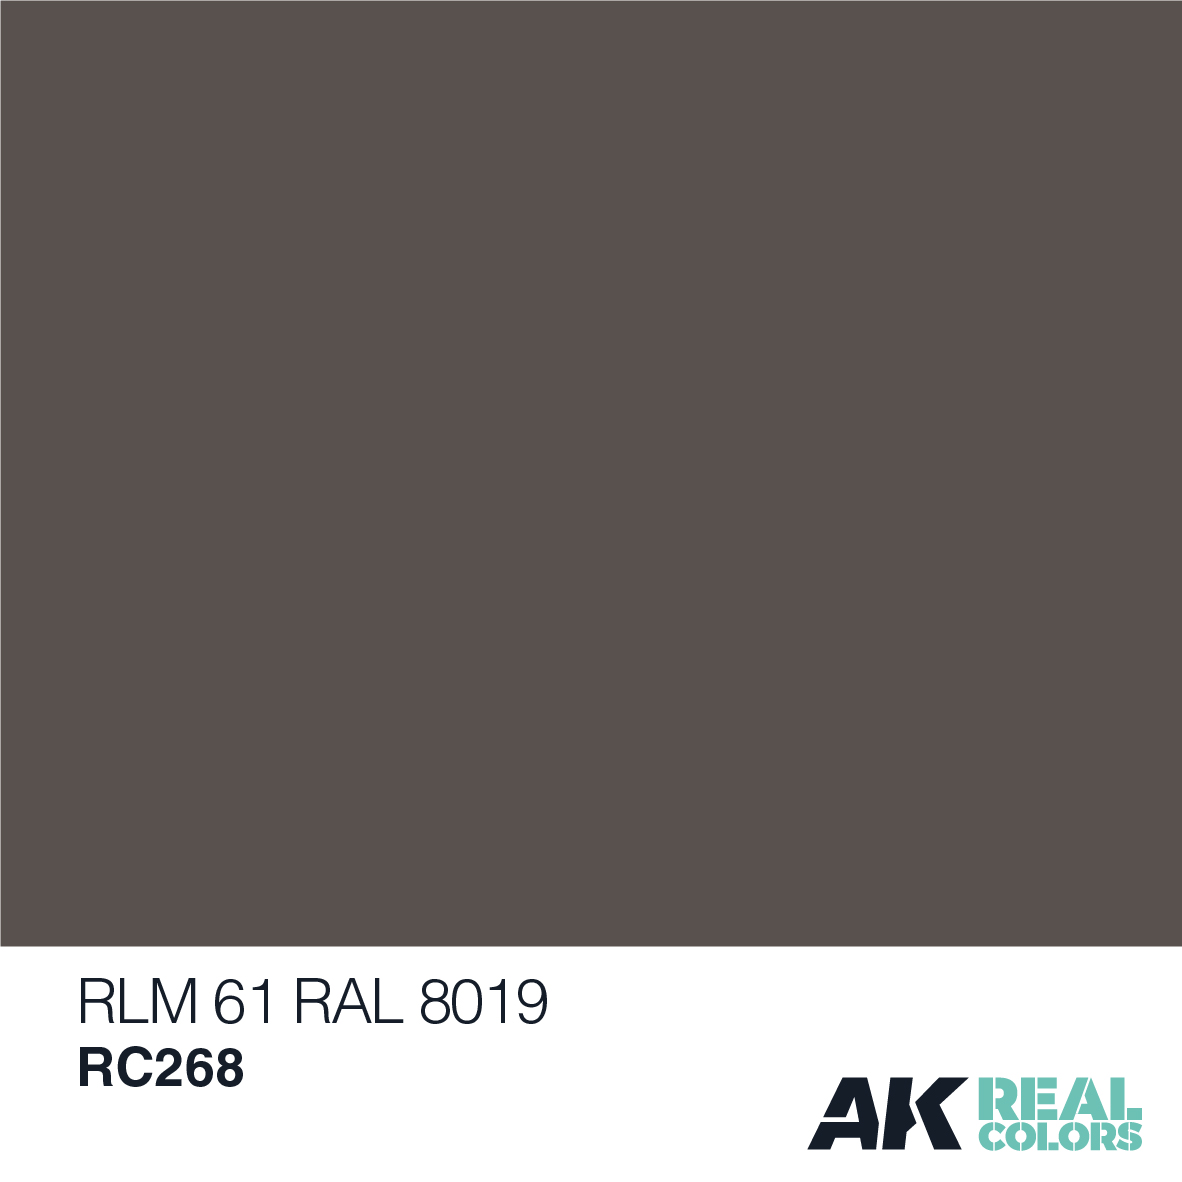 RLM 61 / RAL 8019